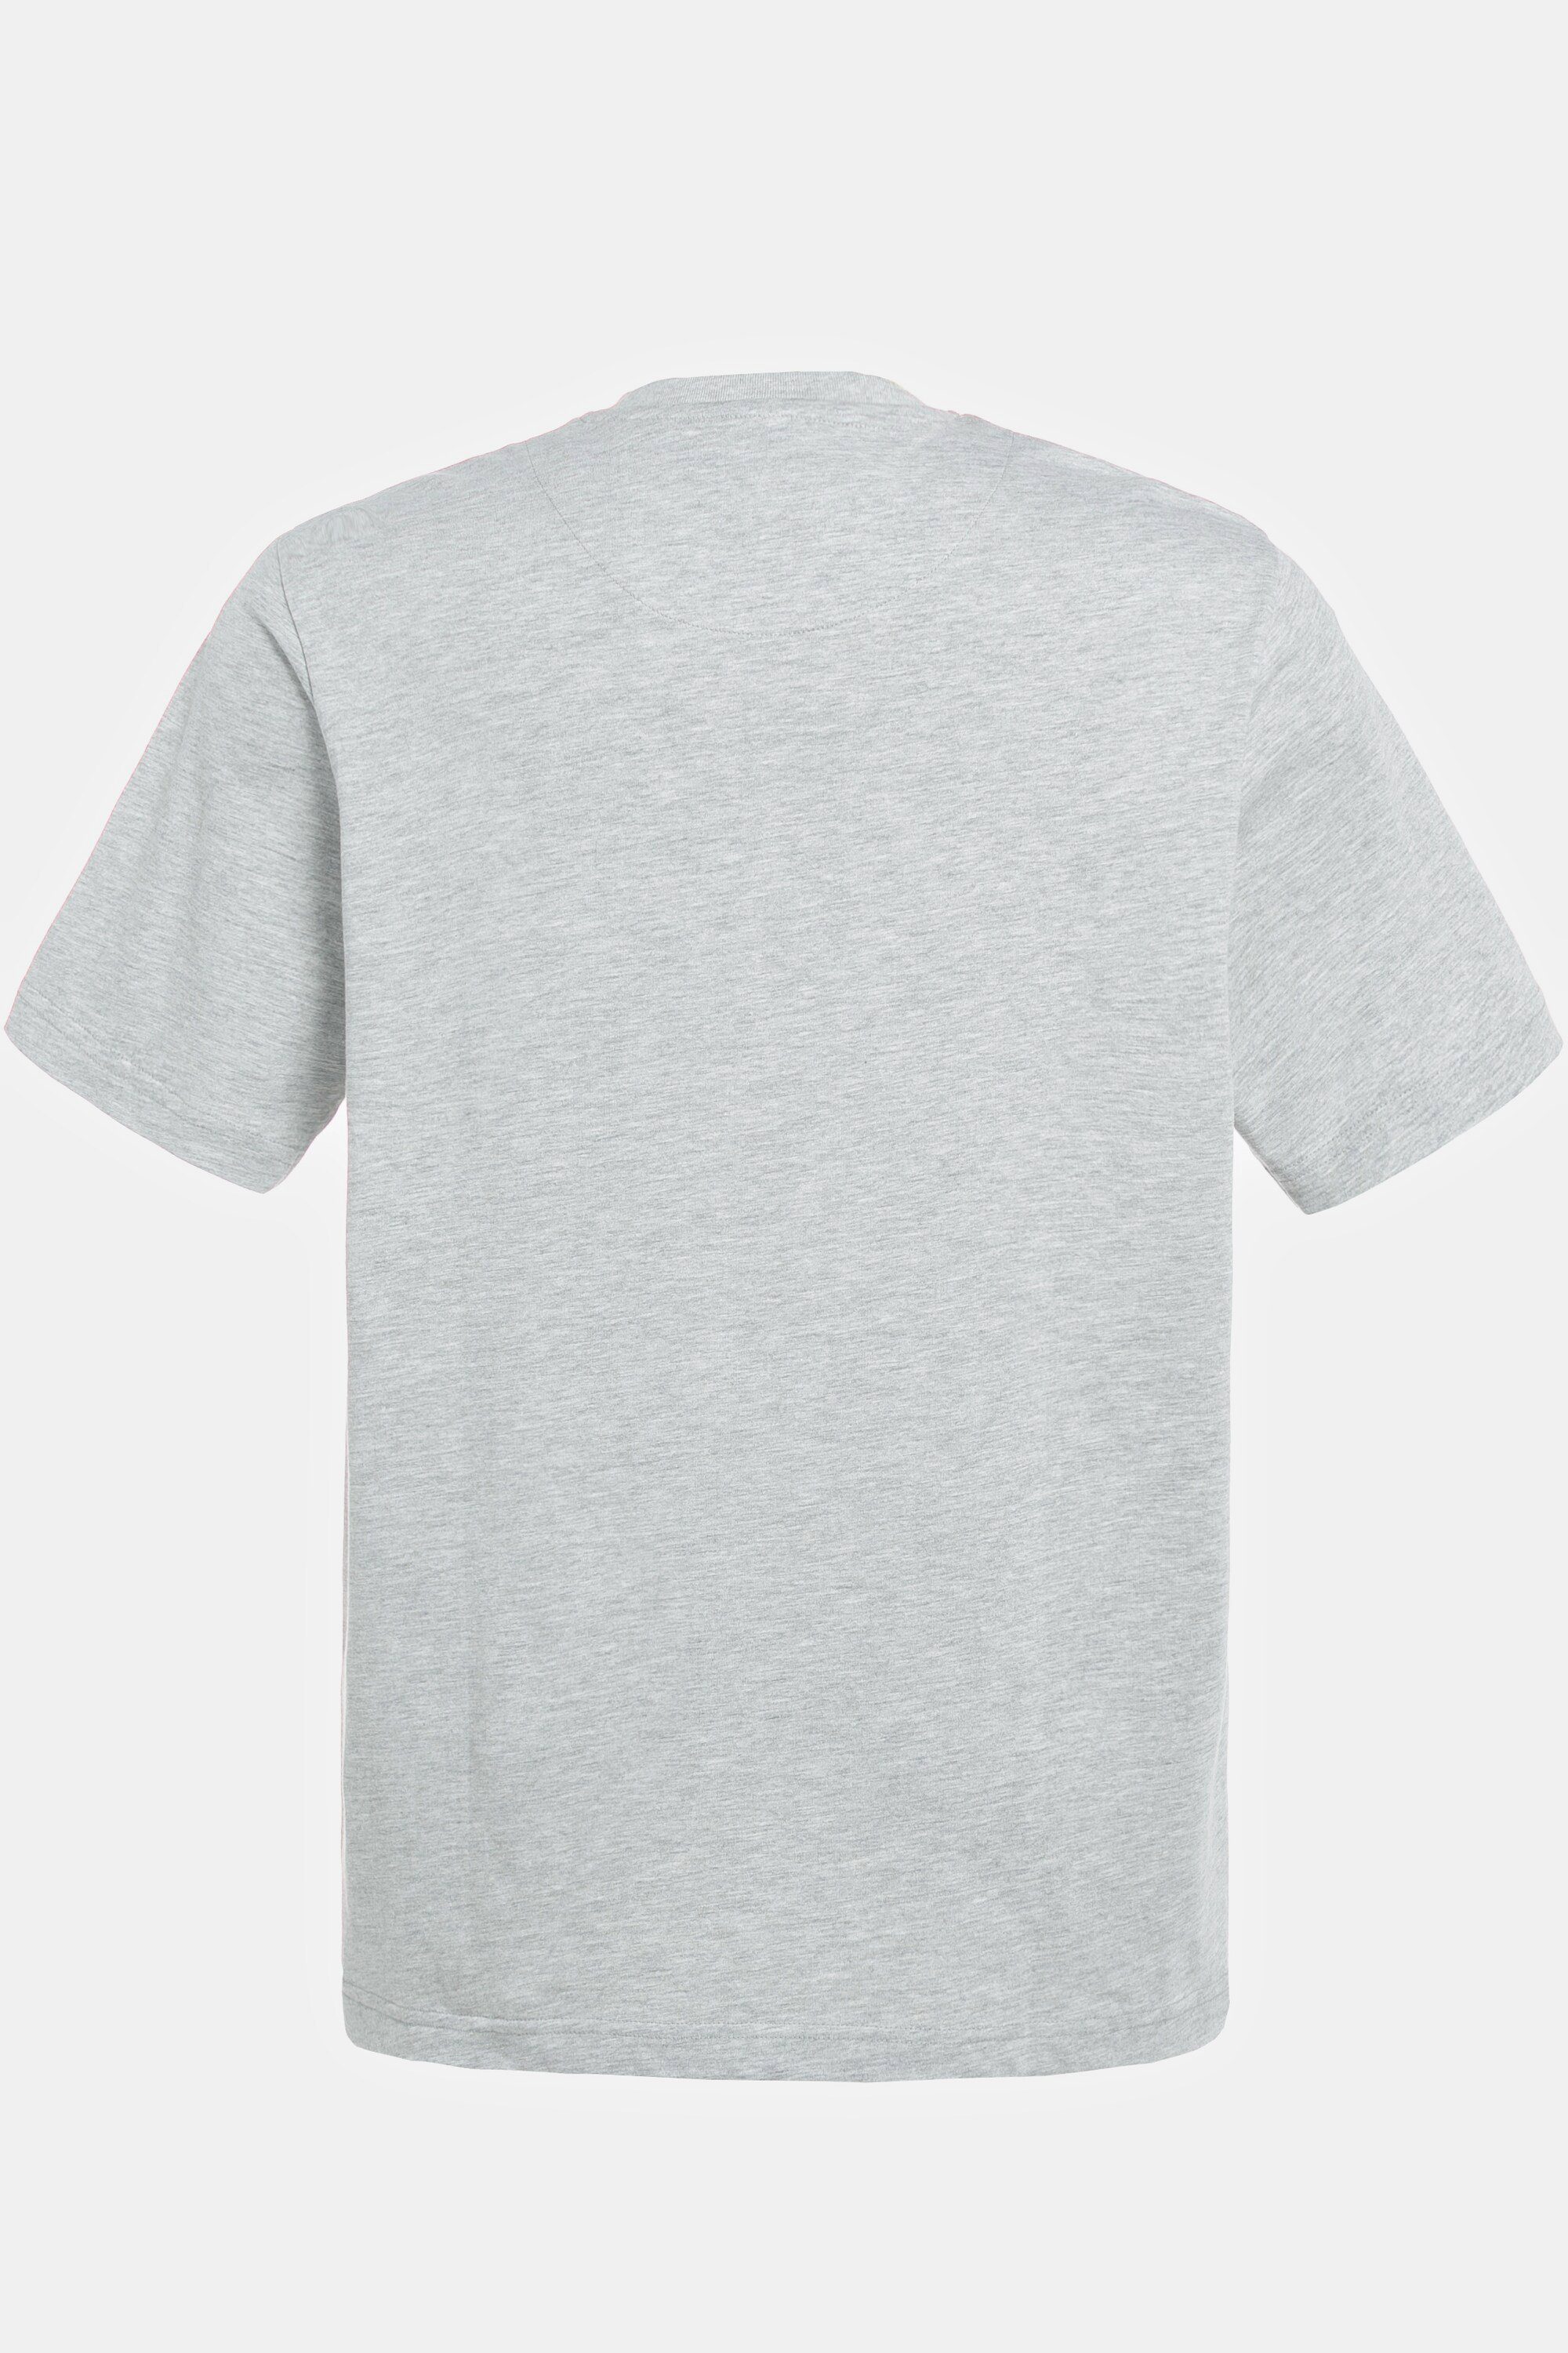 grau T-Shirt T-Shirt melange Brusttasche JP1880 Halbarm